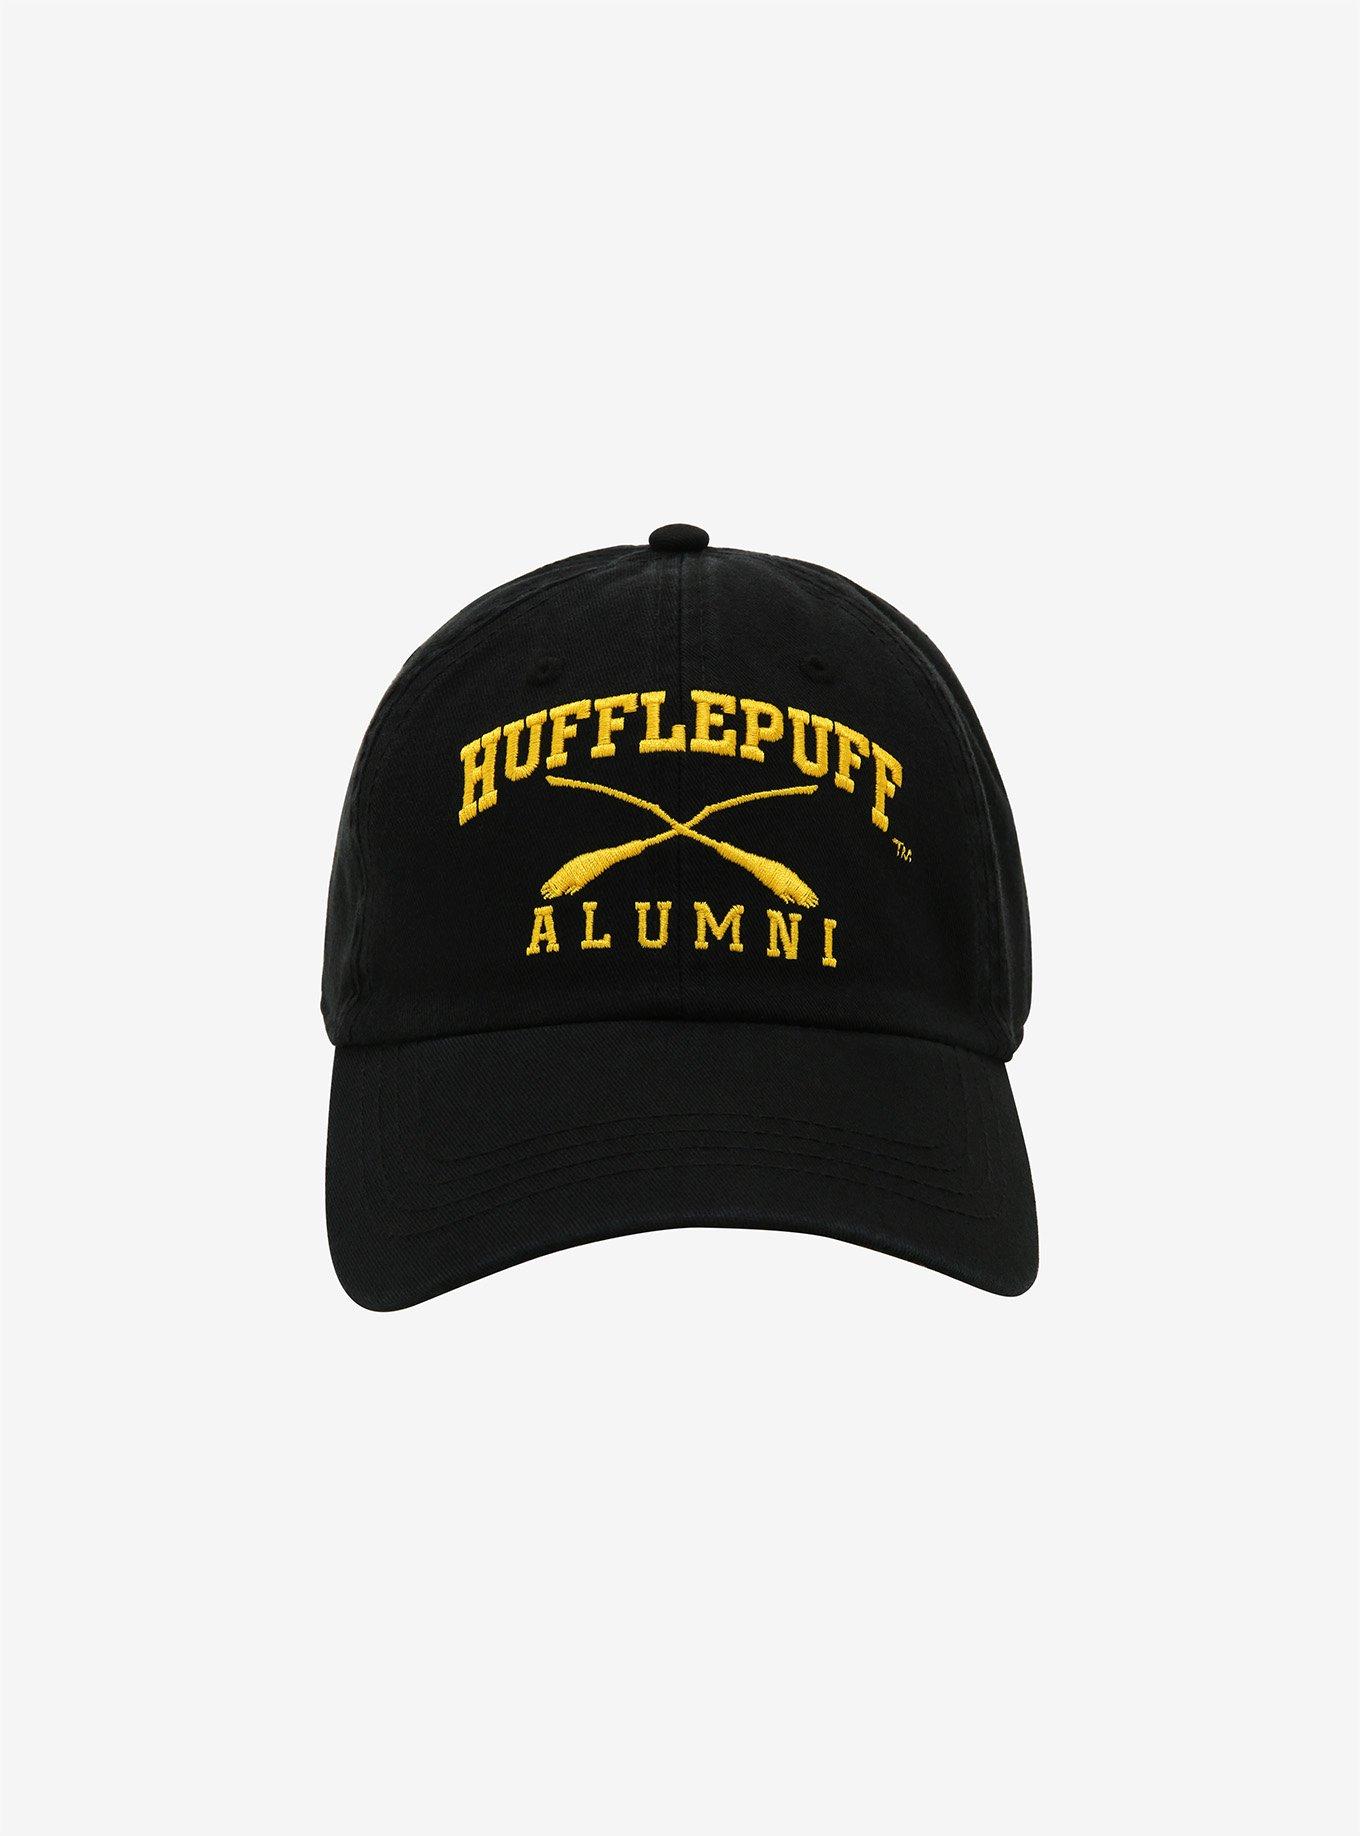 BoxLunch Harry Hufflepuff Alumni Cap BoxLunch - Potter | Exclusive